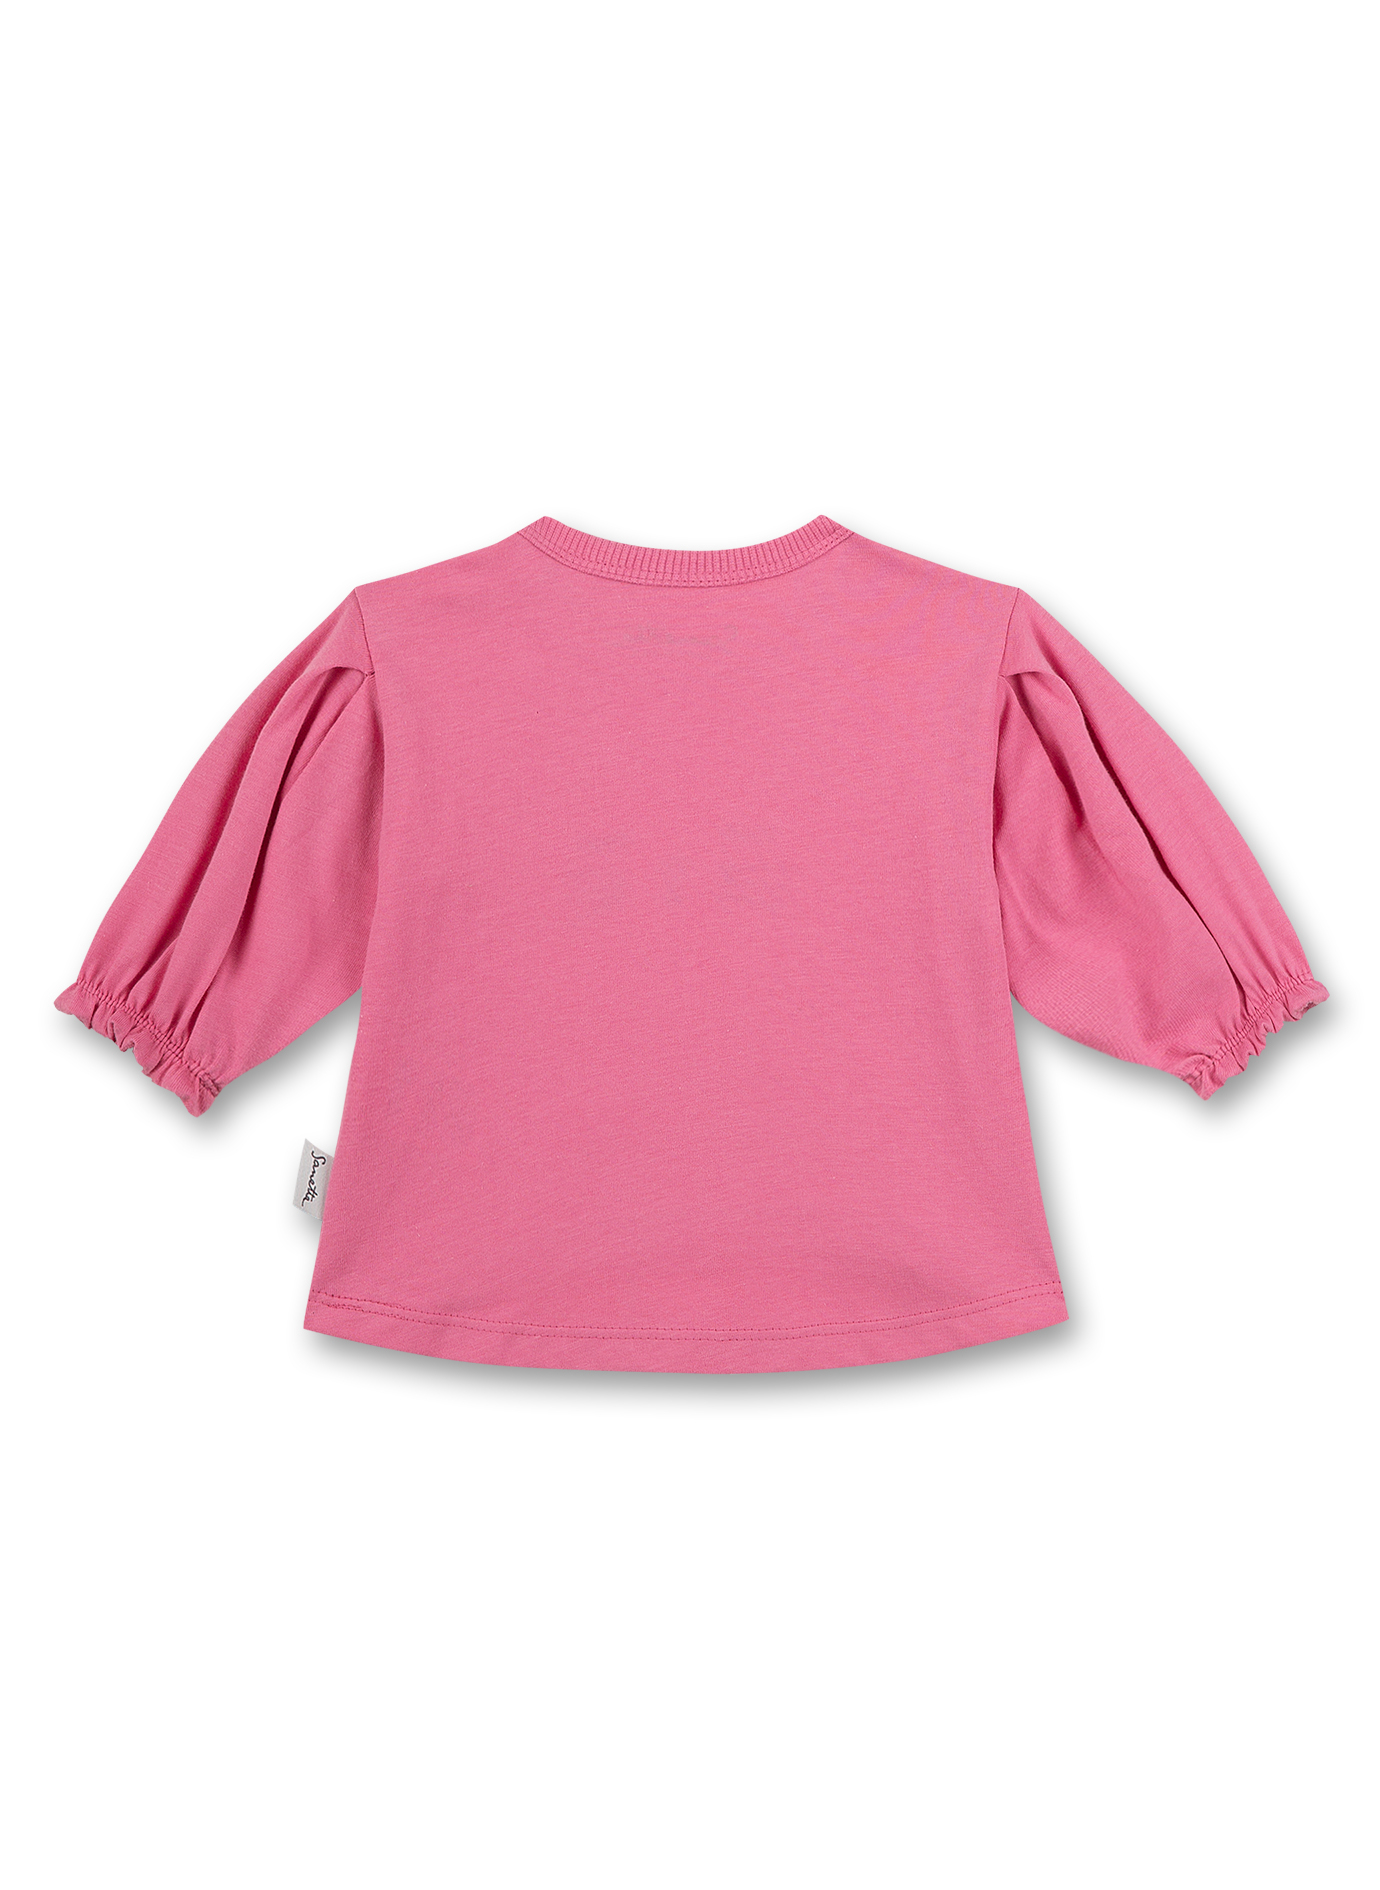 Mädchen-Shirt langarm Pink Lovely Leo